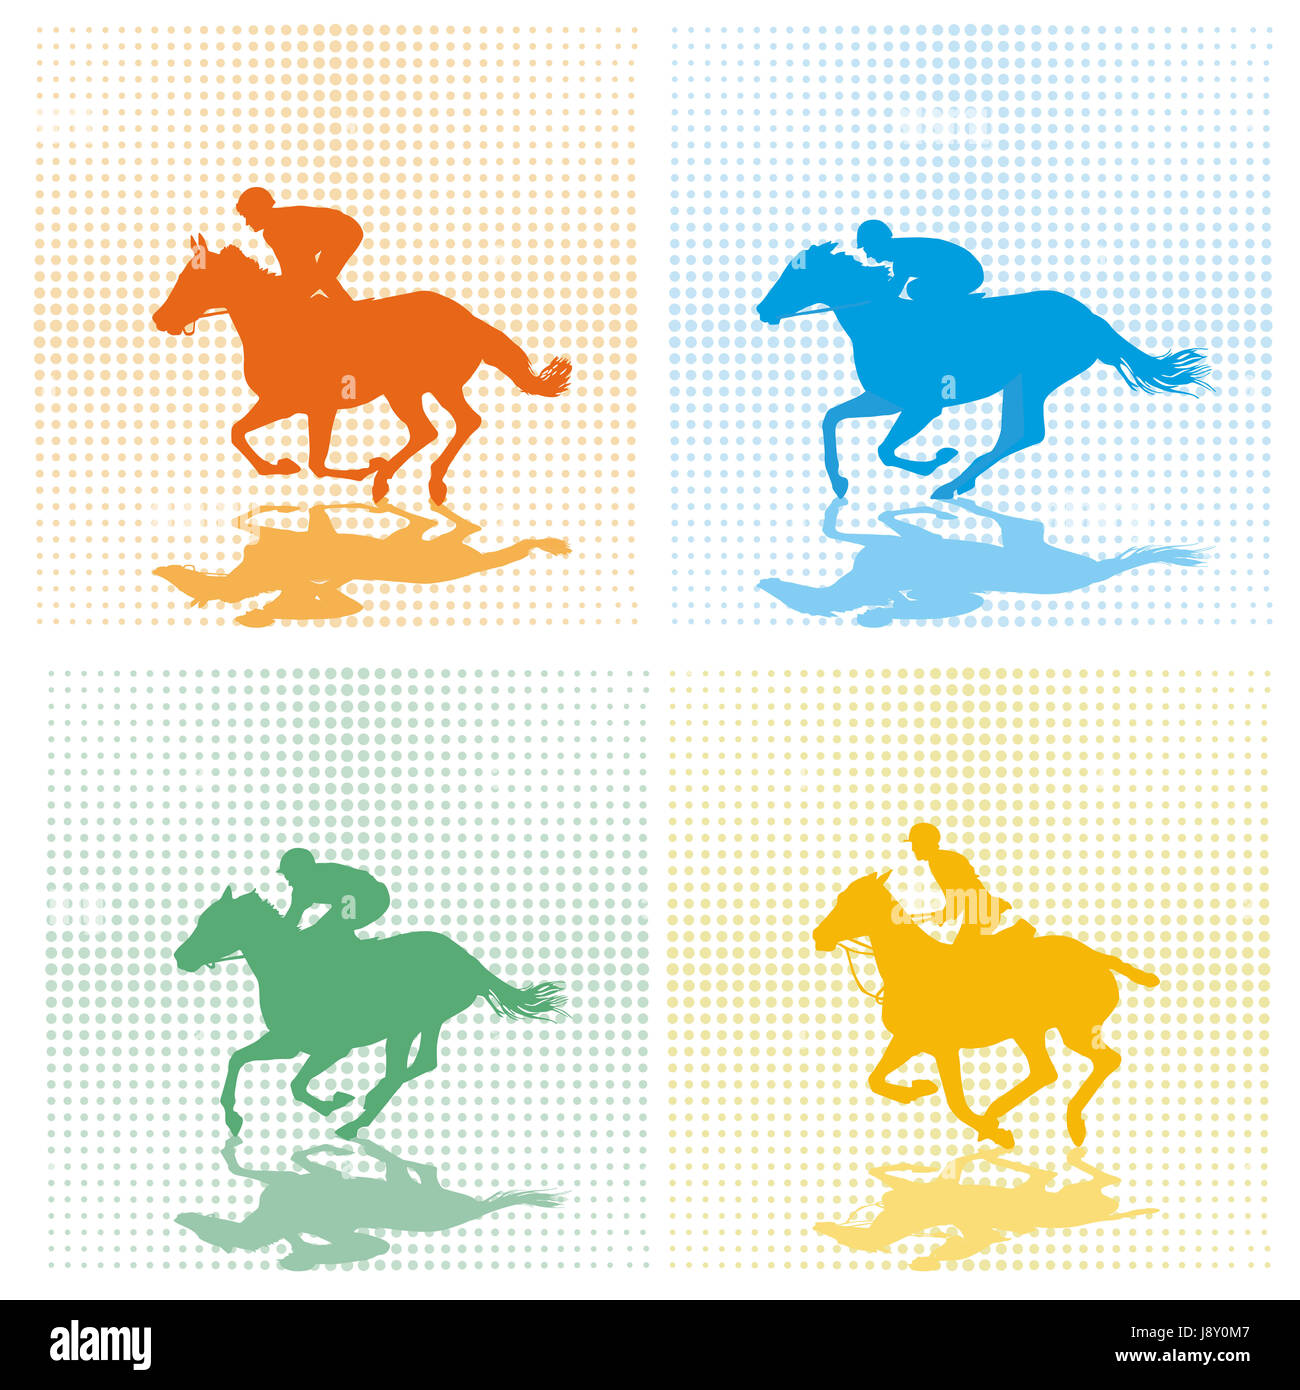 sport, sports, ride, horse, black, swarthy, jetblack, deep black, horses, Stock Photo